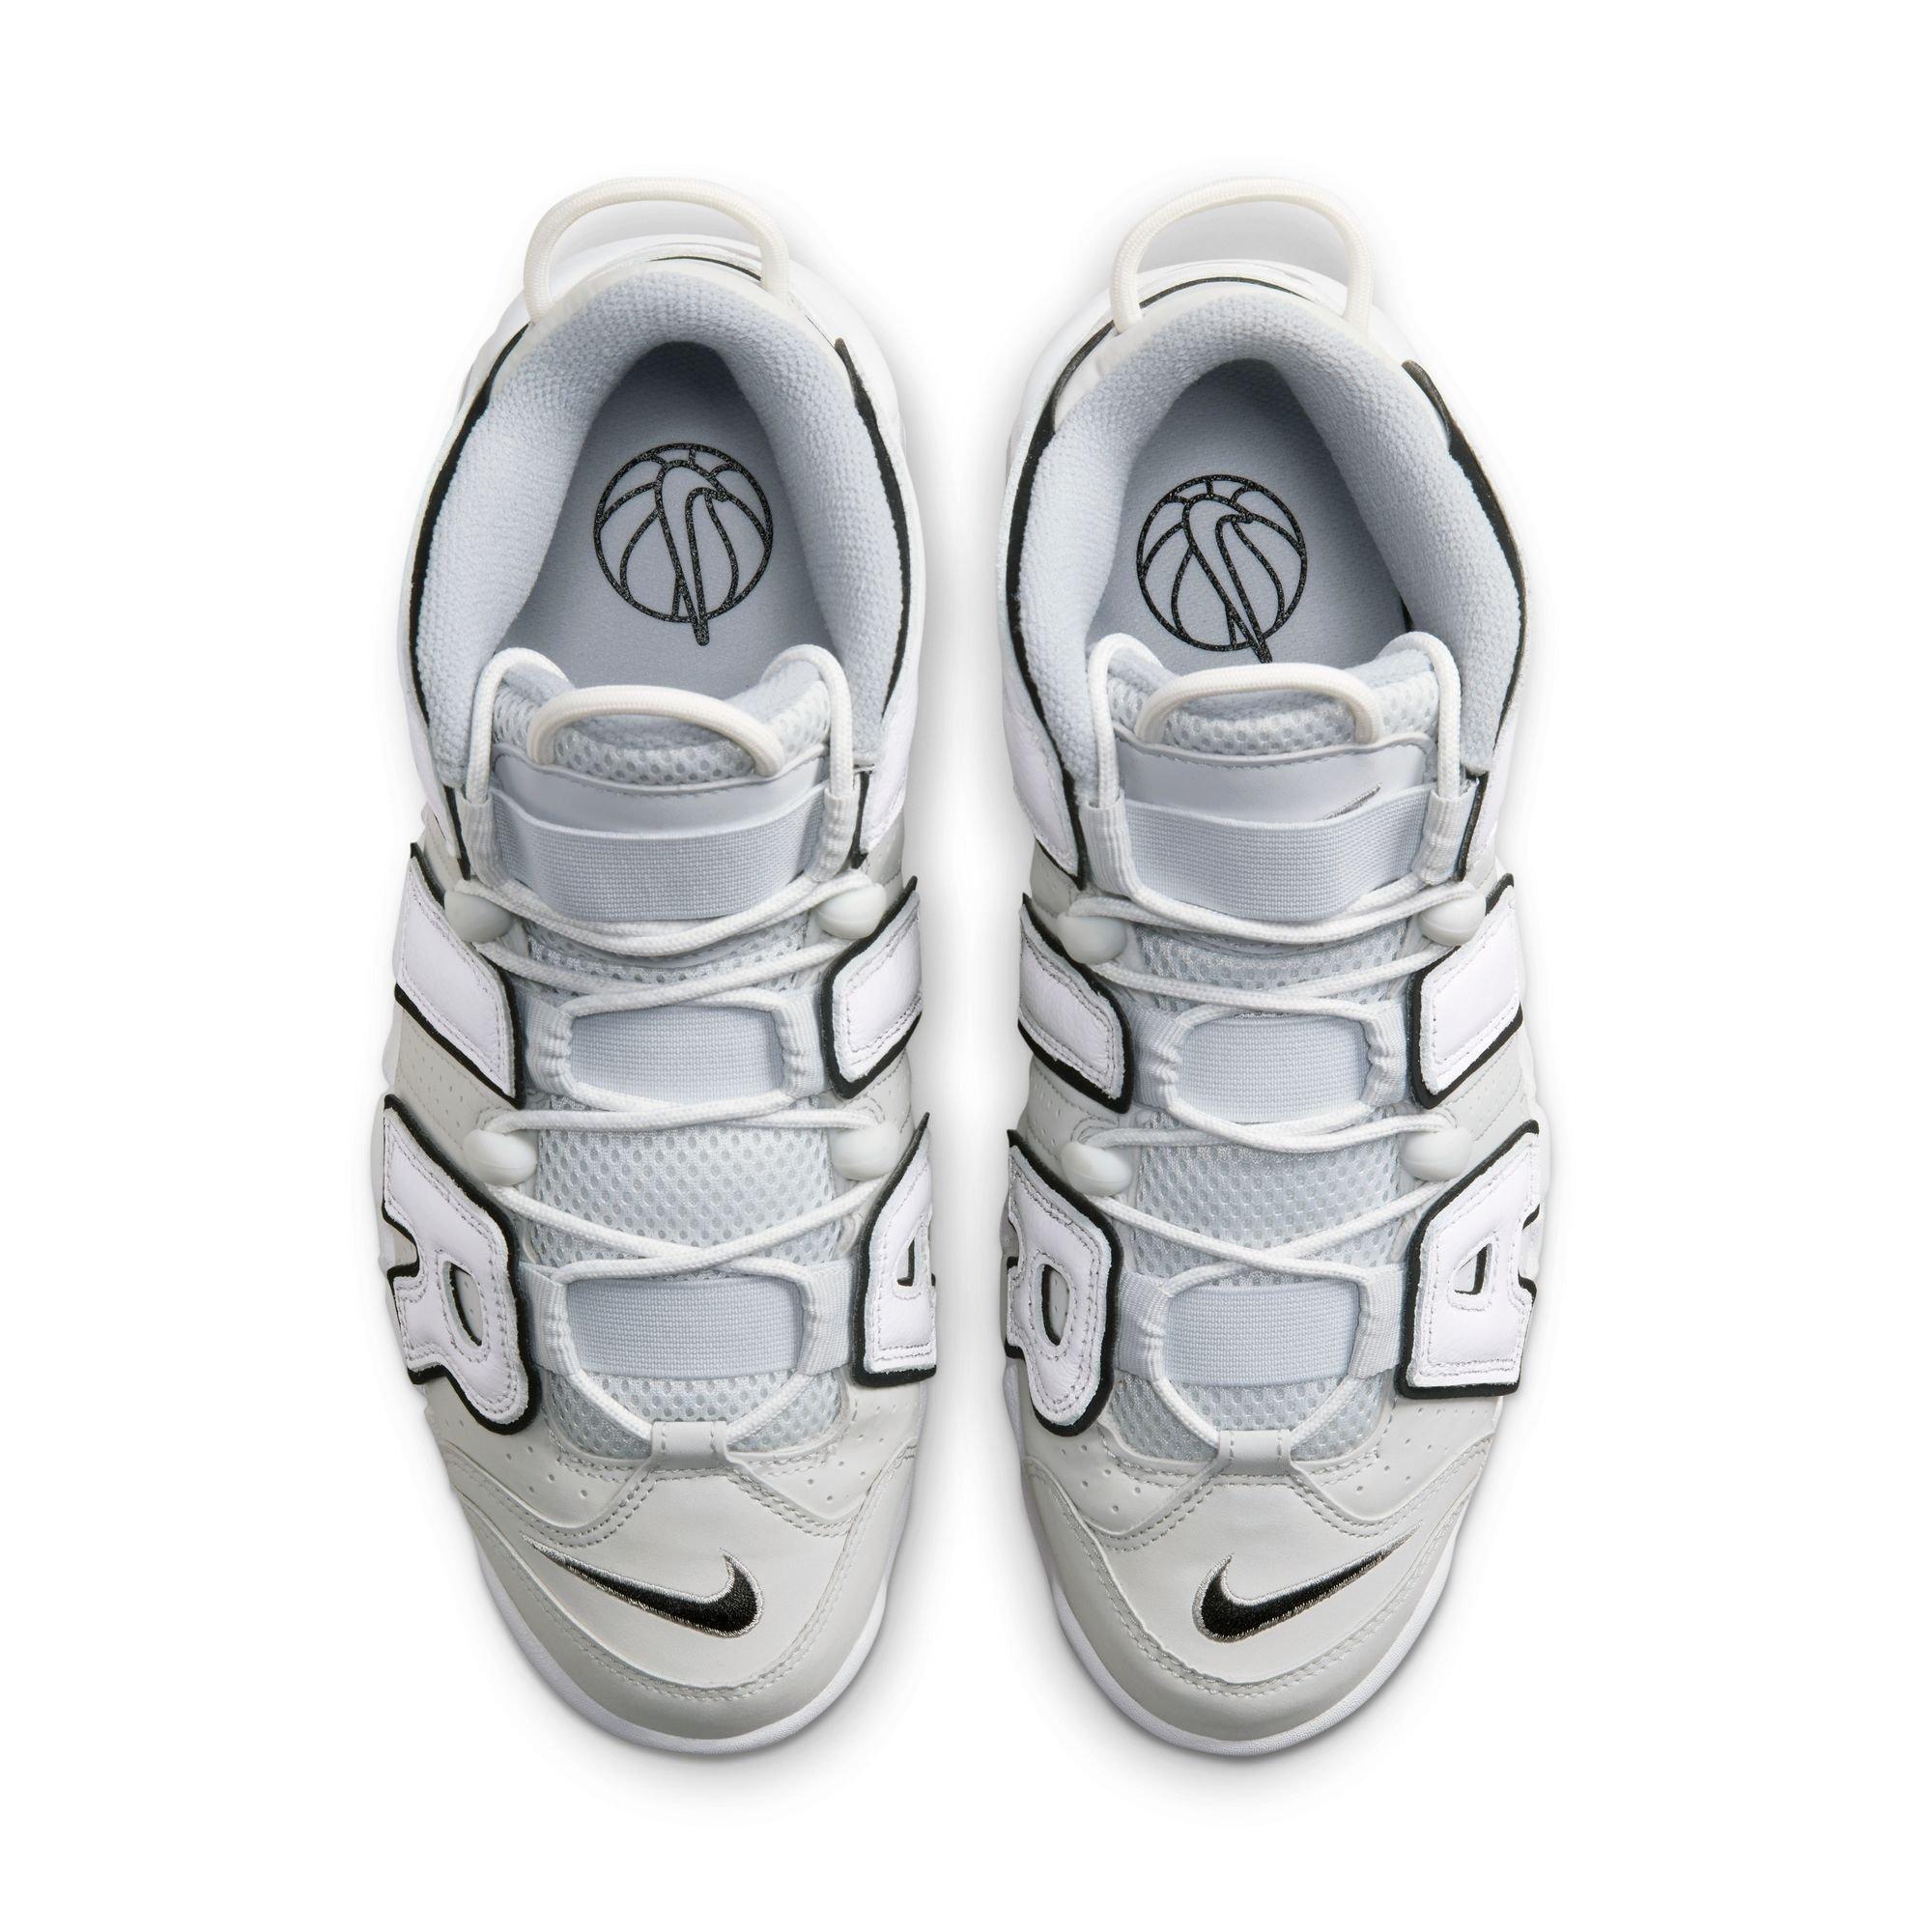 Nike Air More Uptempo Photon Dust - Size 10.5 Men